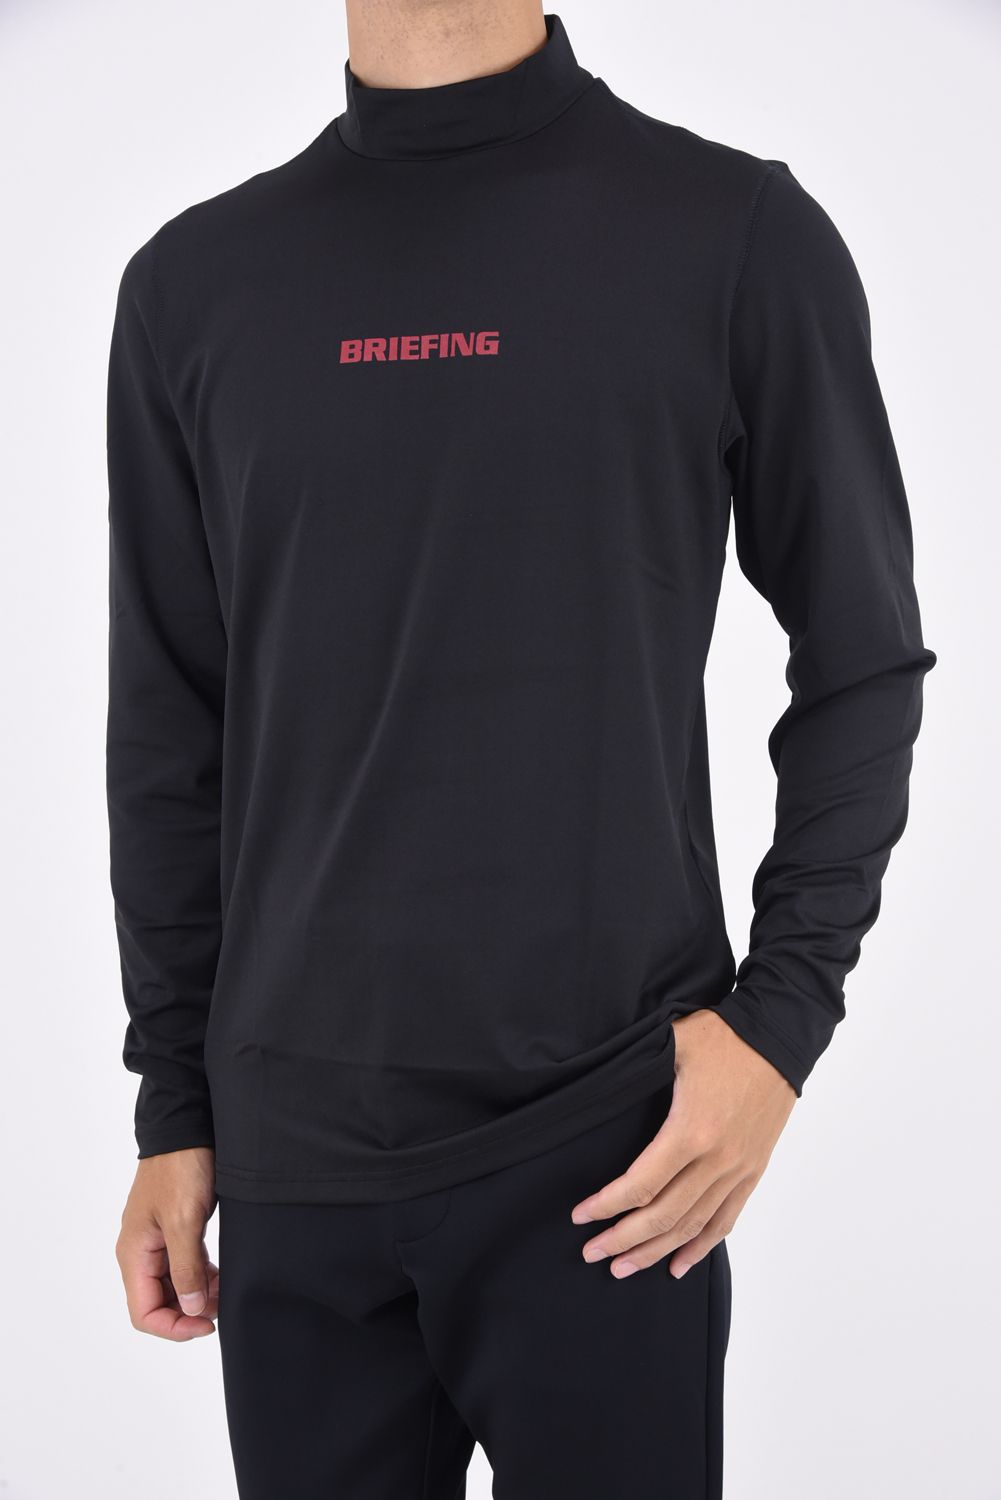 BRIEFING - MENS TOUR LS HIGH NECK BBG231 / ブランドロゴ ロング 